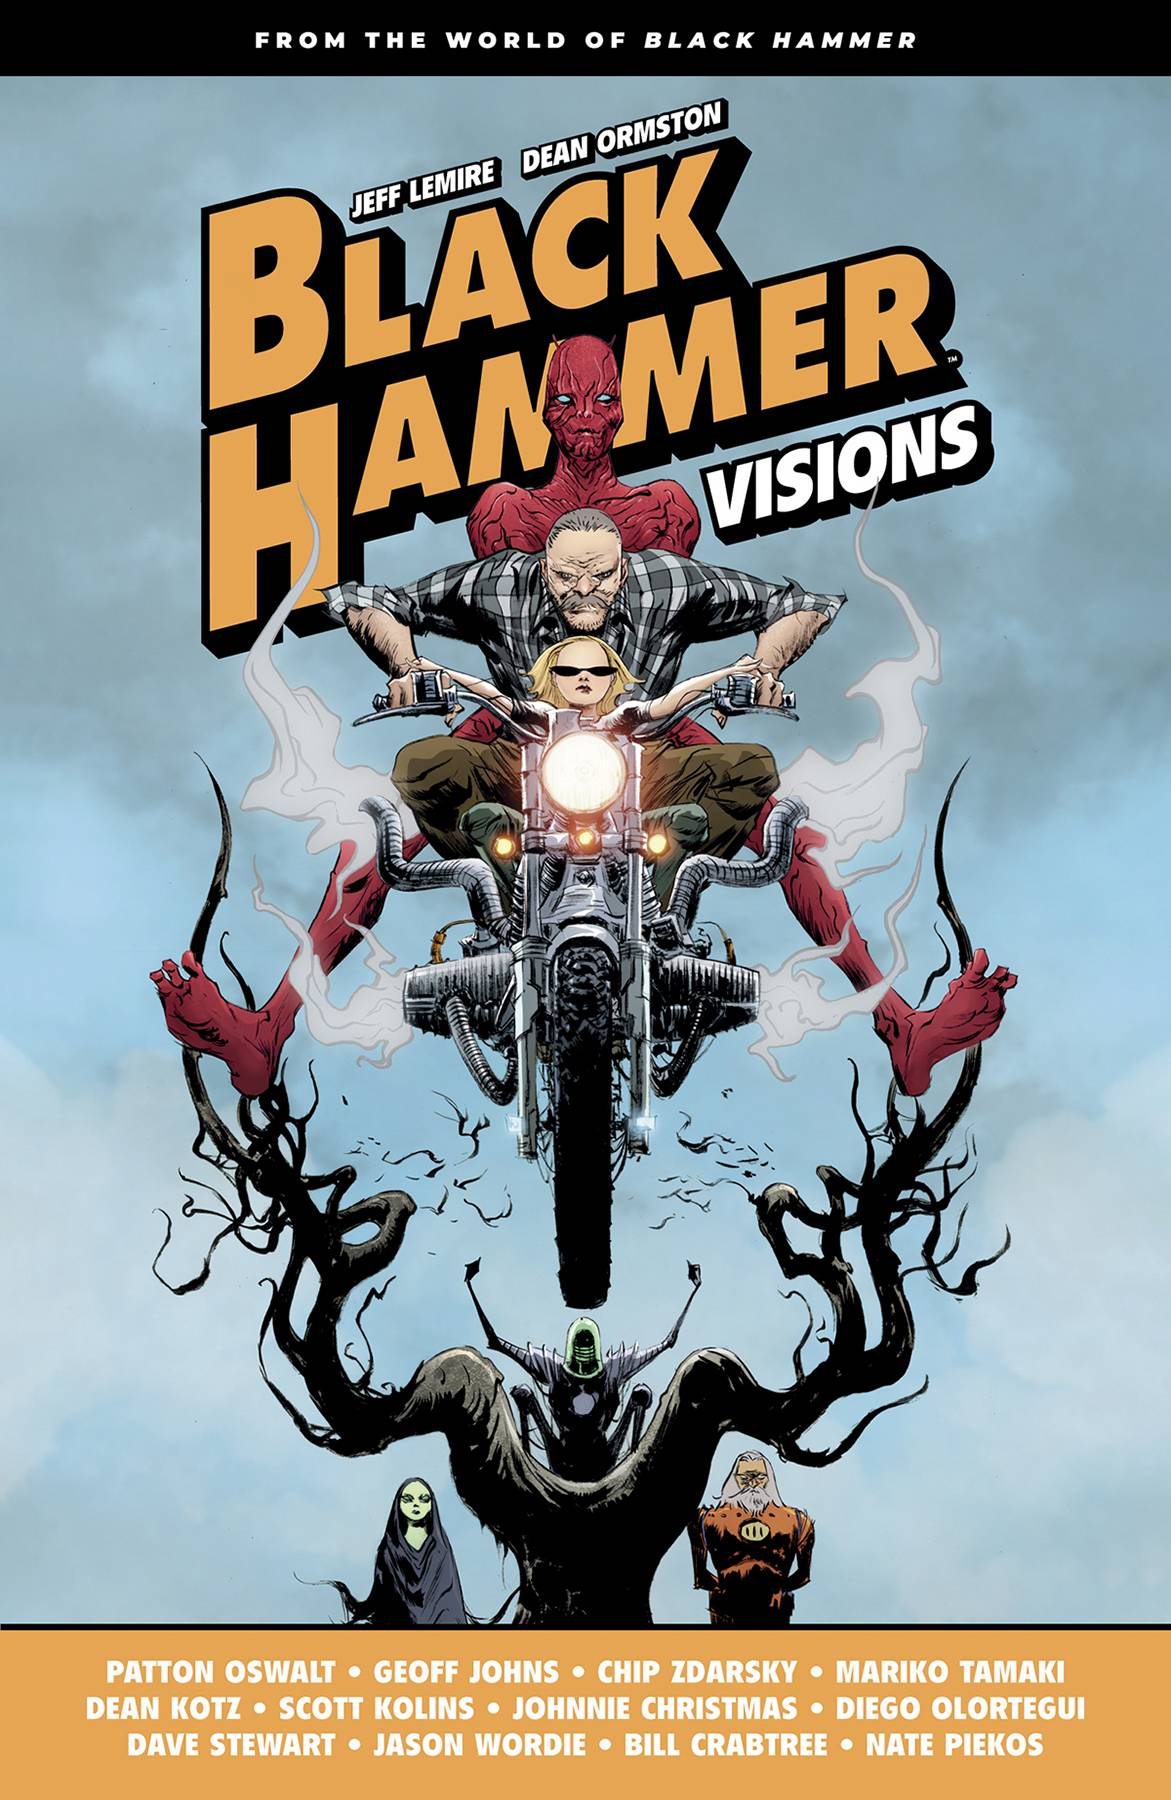 BLACK HAMMER VISIONS HC VOL 01